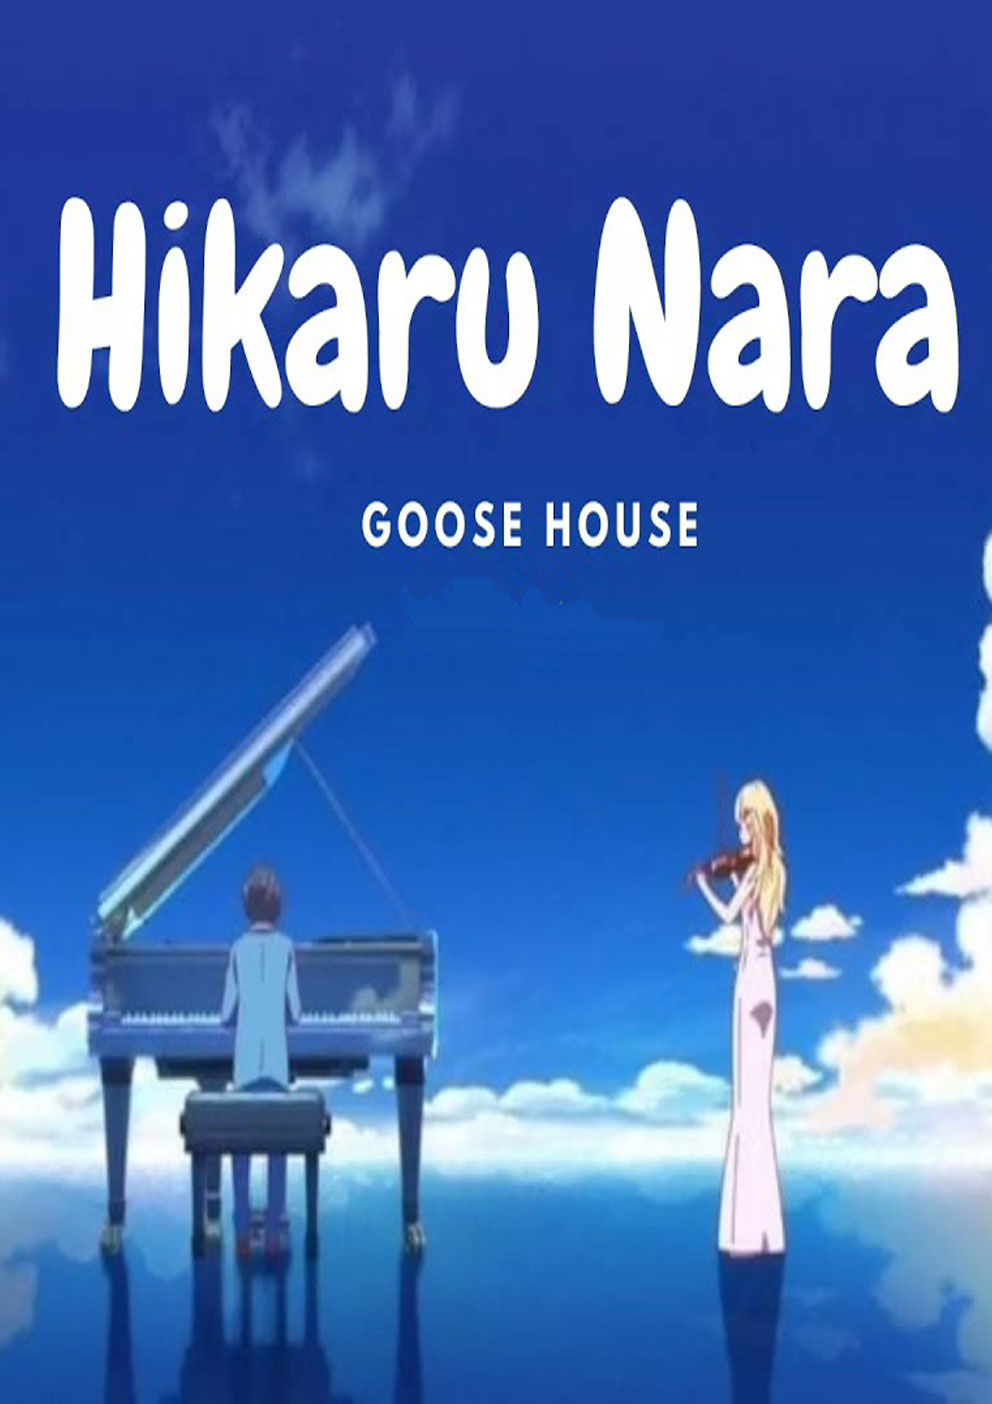 Your Lie in April OP1  Goose House - Hikaru Nara (Lyrics with english  Translation) 